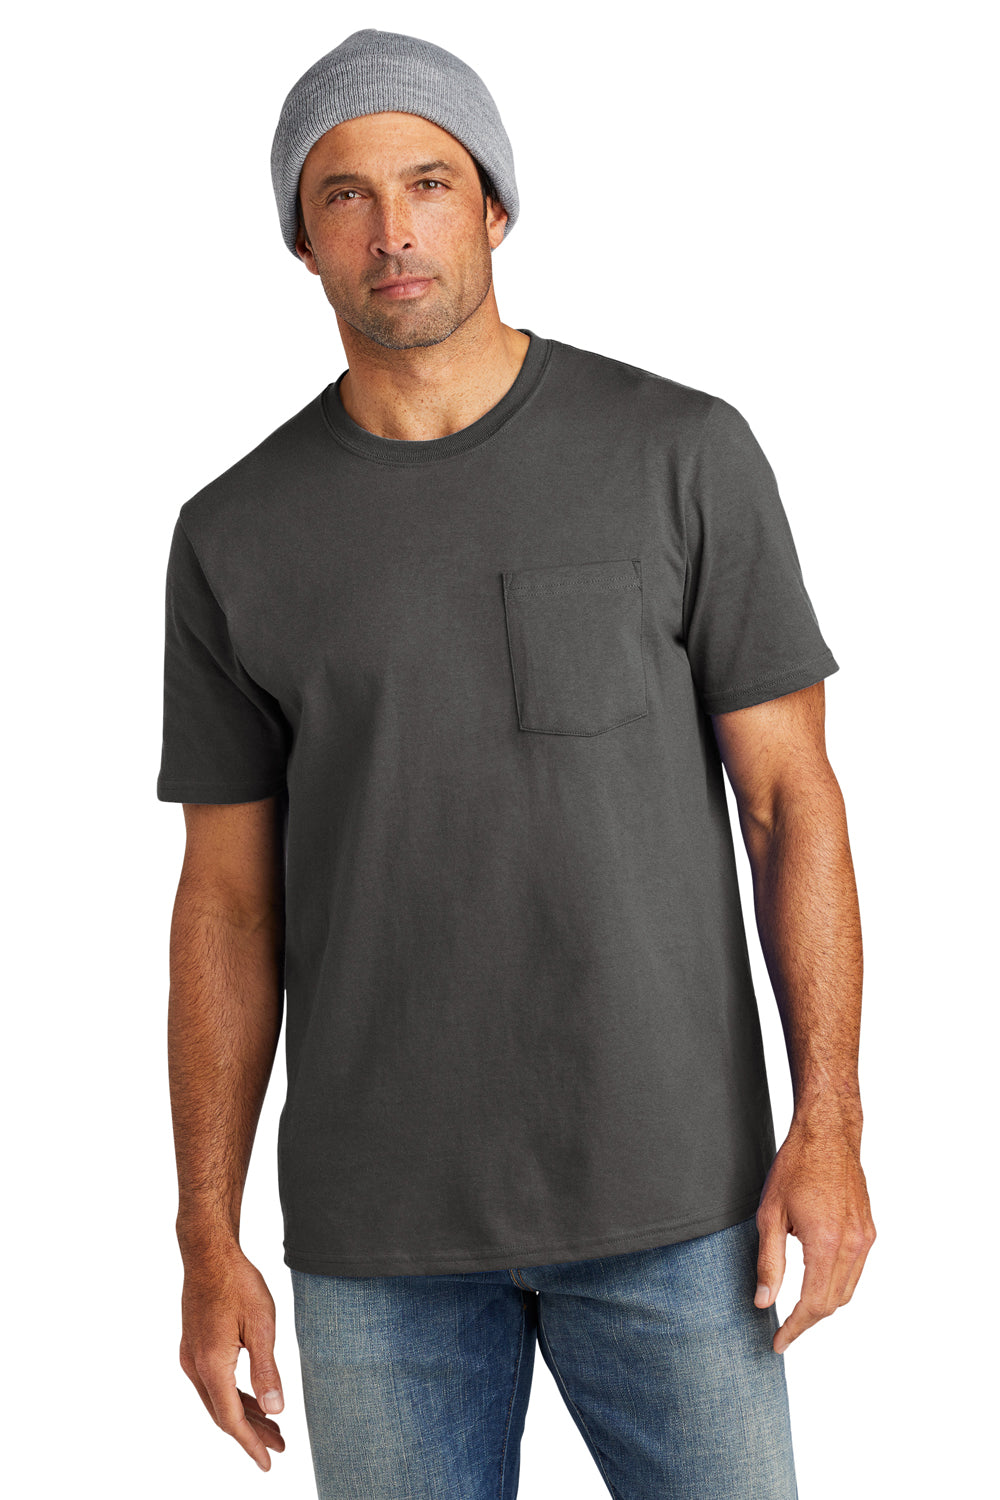 Volunteer Knitwear VL100P USA Made All American Short Sleeve Crewneck T-Shirt w/ Pocket Steel Grey Front